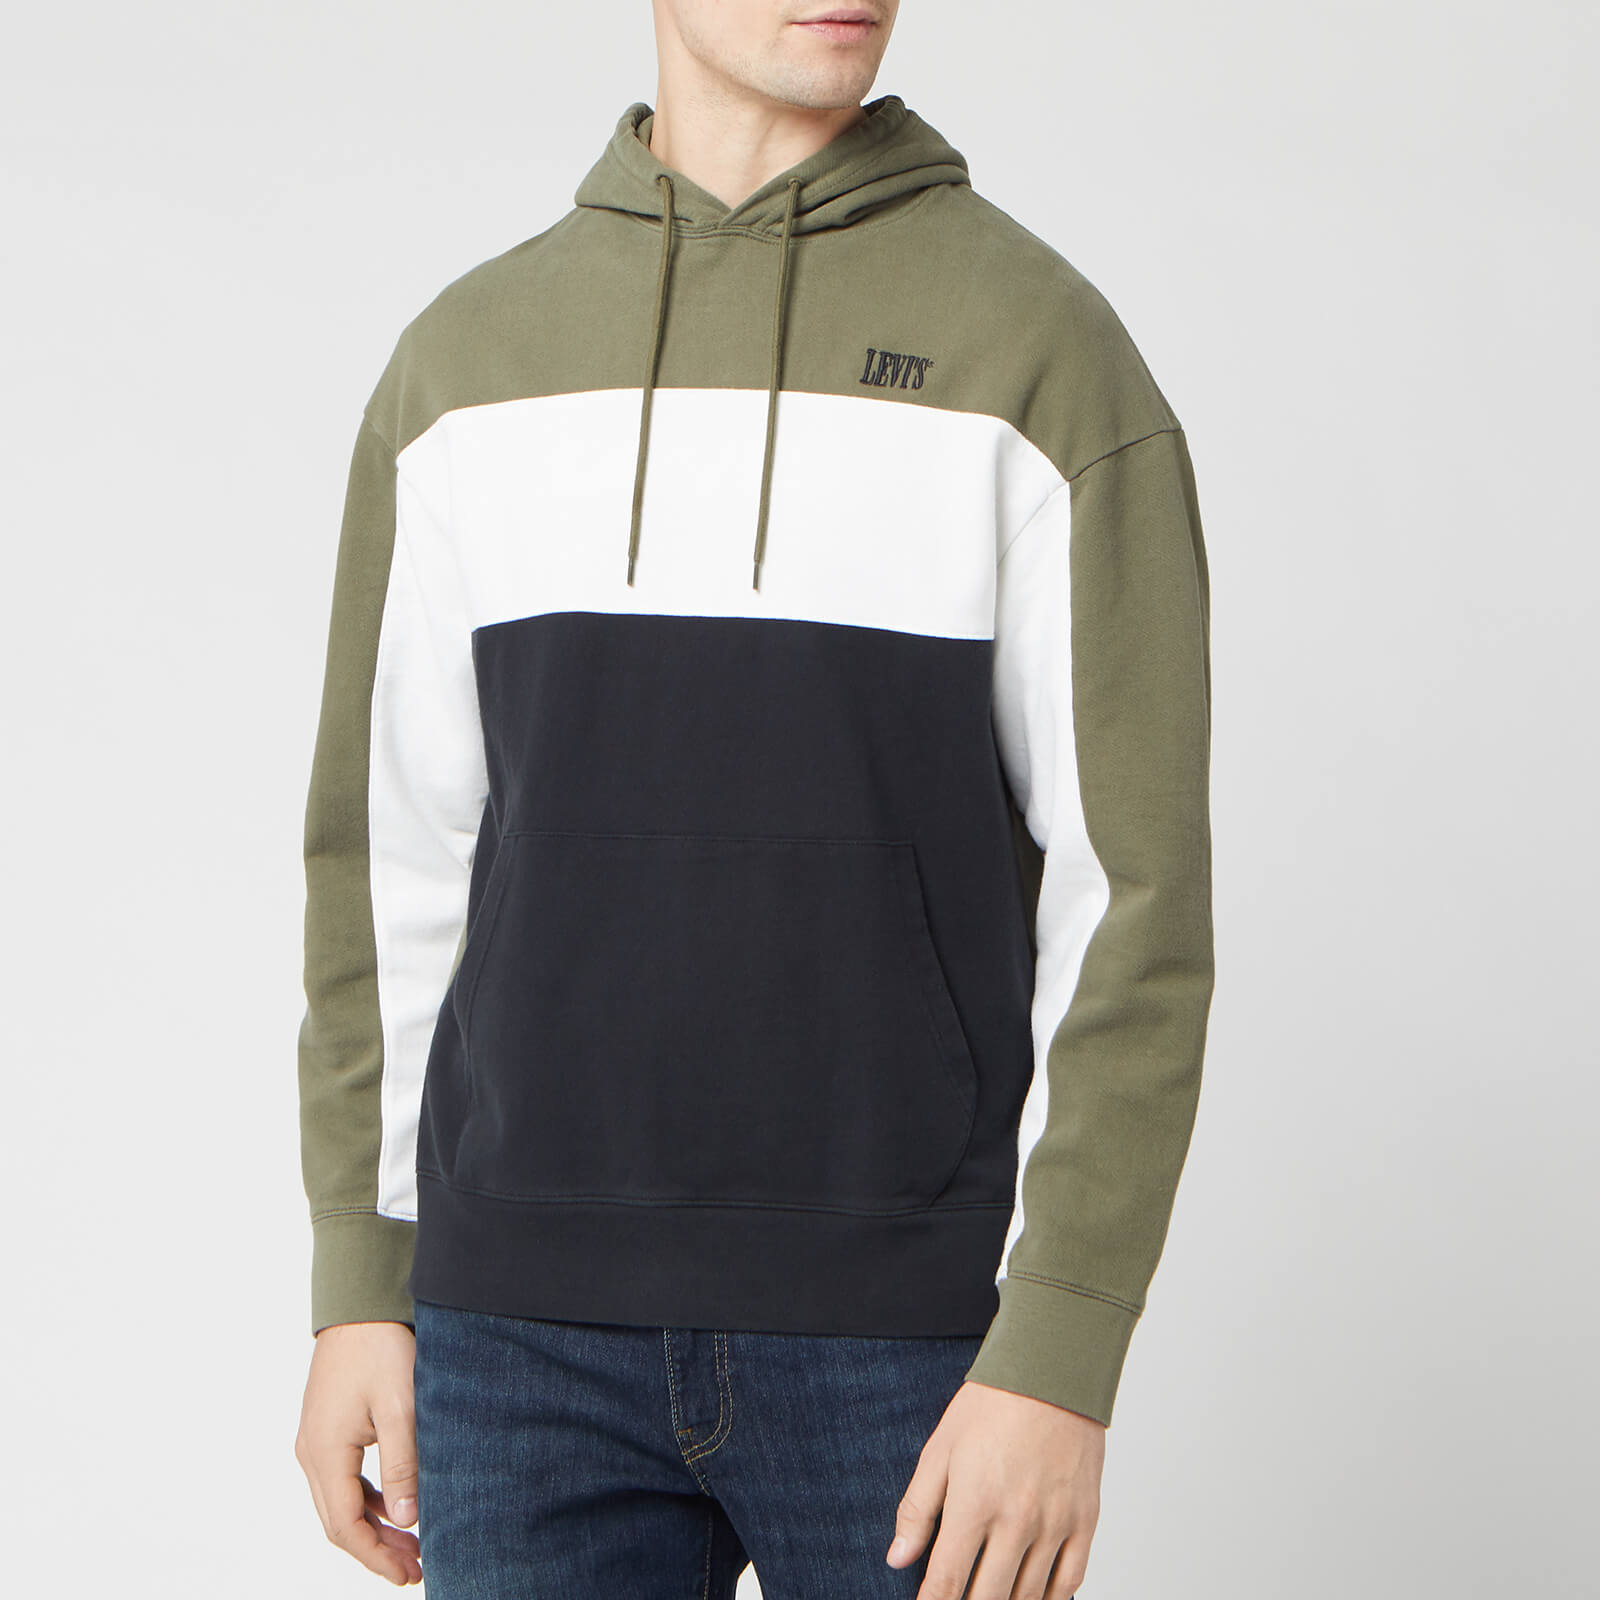 levis hoodie color block